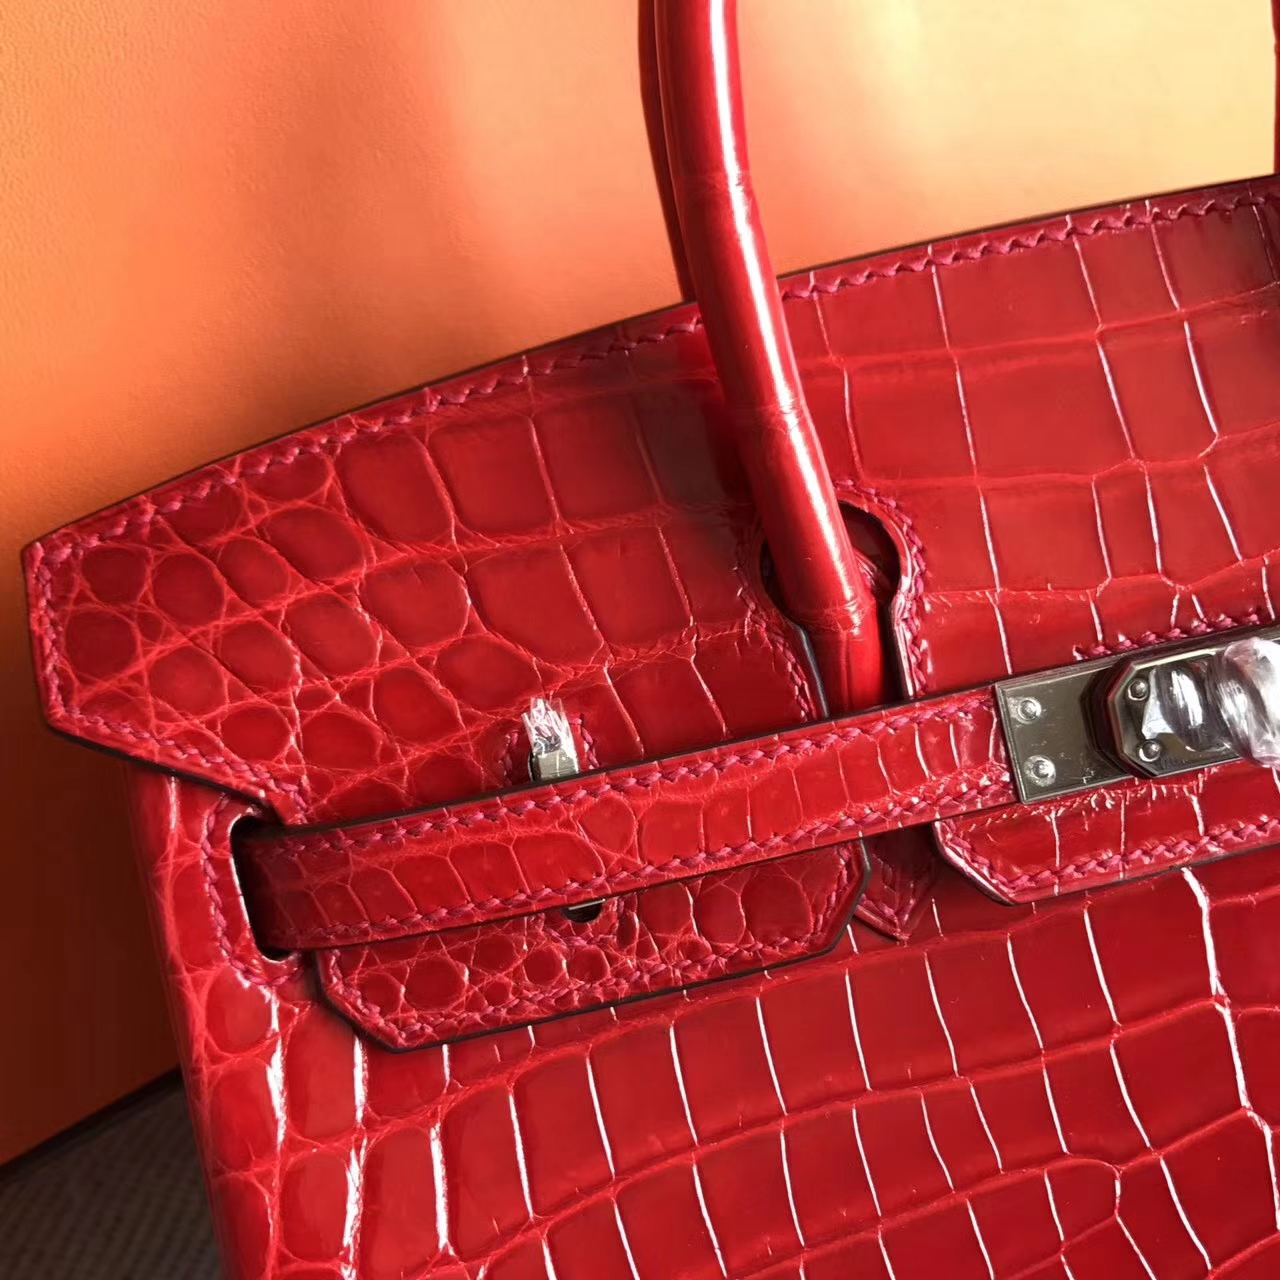 New Pretty Hermes Crocodile Shiny Leather Birkin Tote Bag in CK95 Braise Red